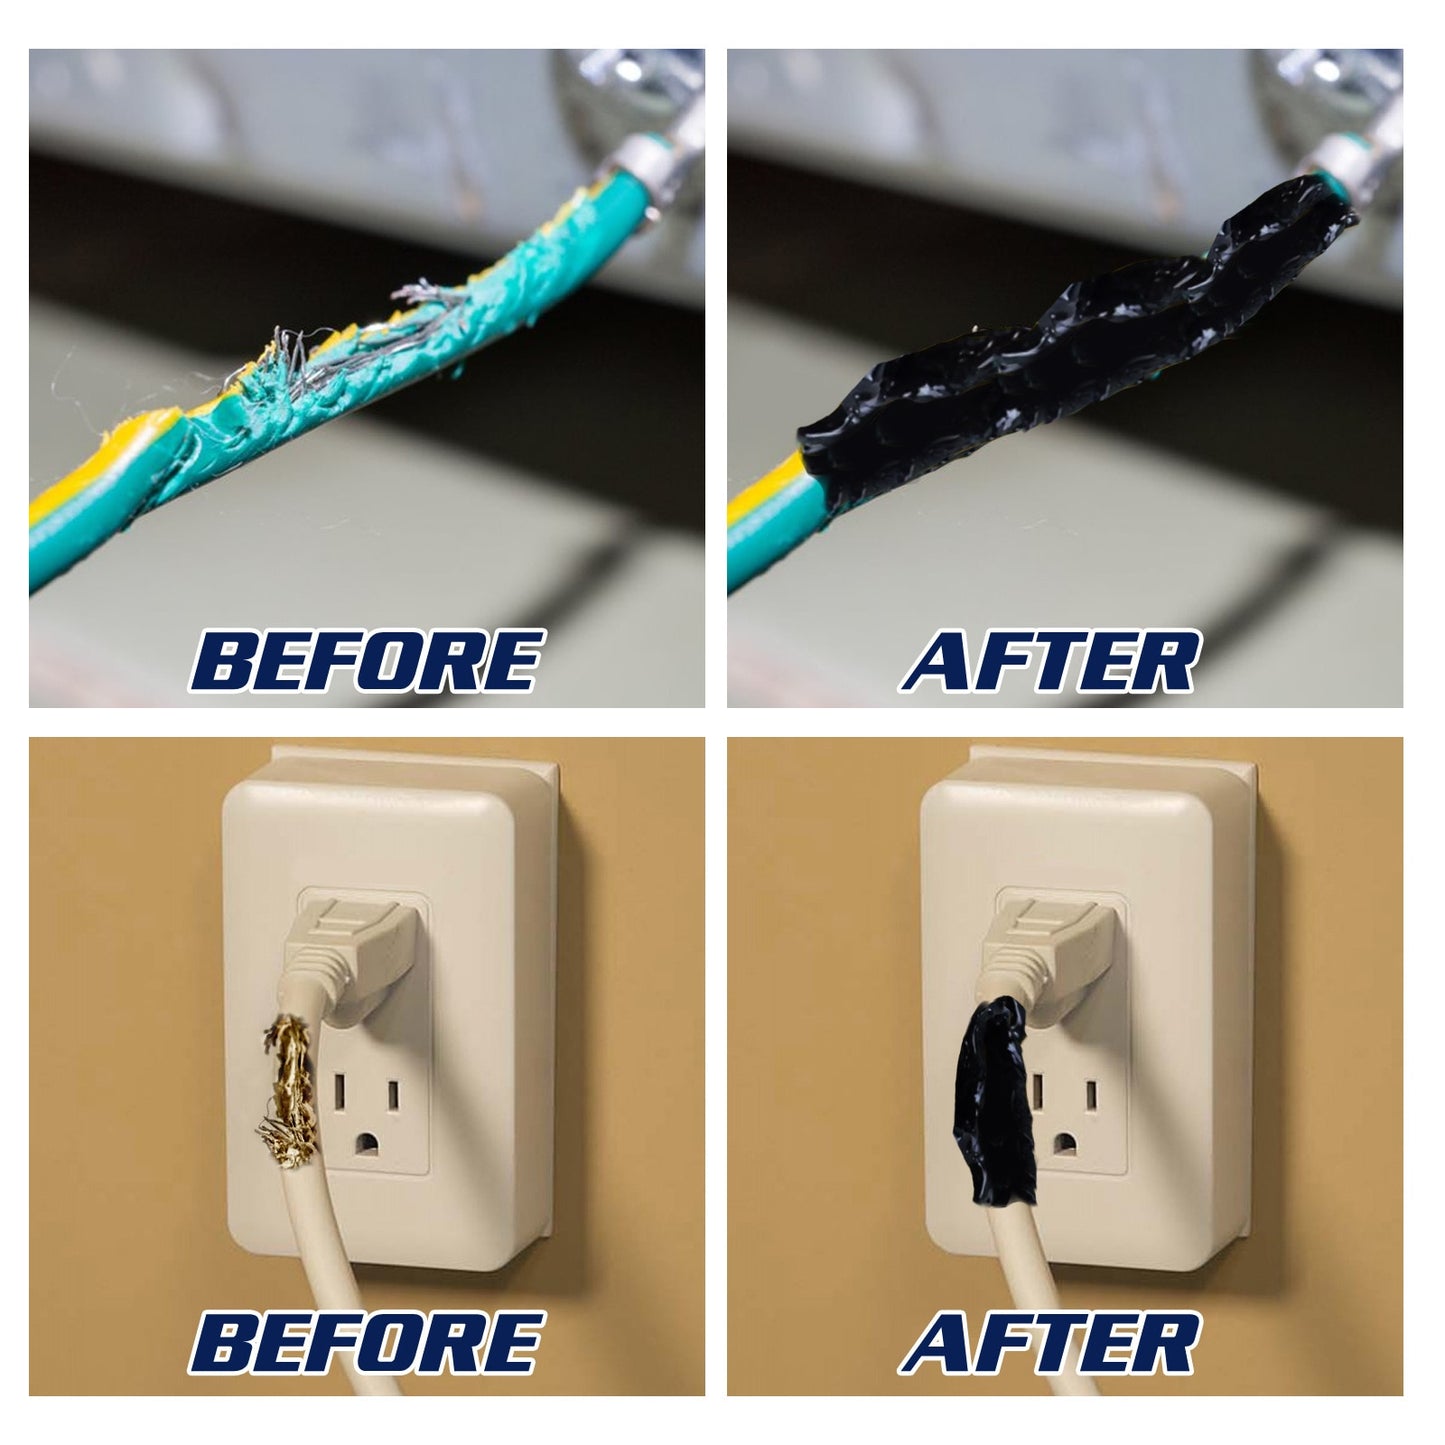 30/50ml Liquid Insulating Tape Repair Rubber Electrical Wire Cable Coat Fix Line - enoughdream.com